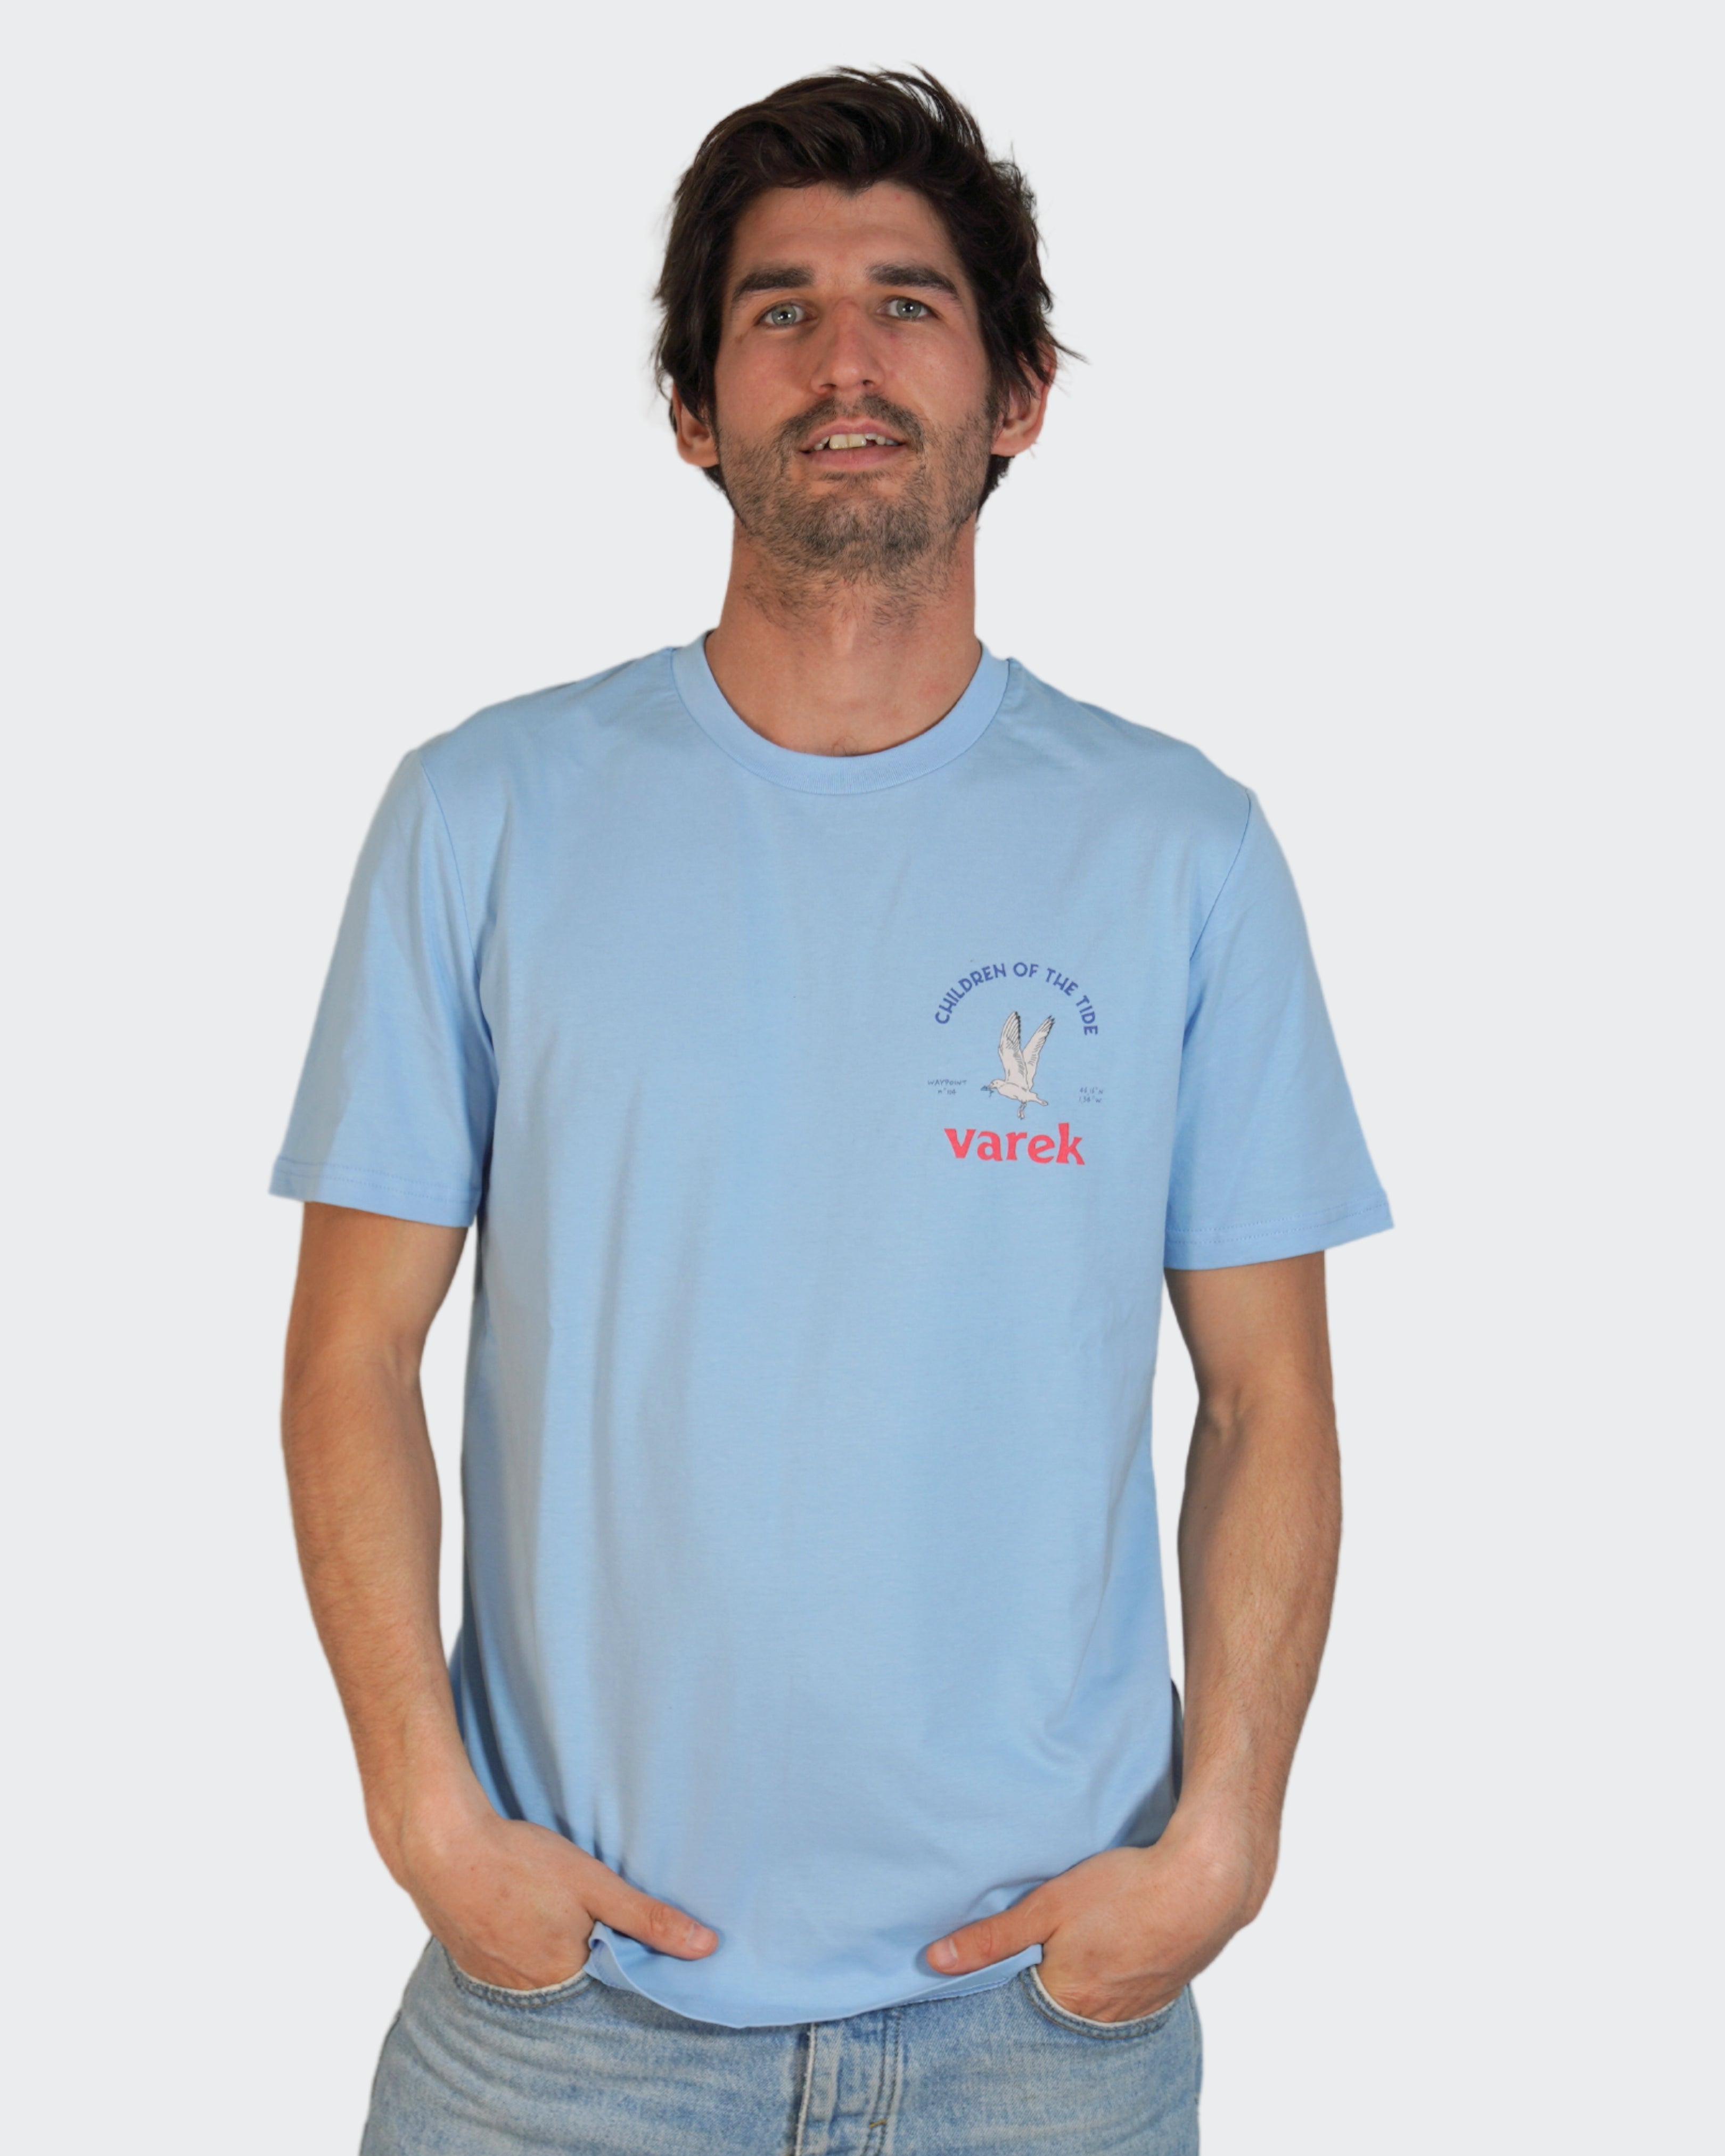 T-shirt 100% coton unisexe : Waypoint 114